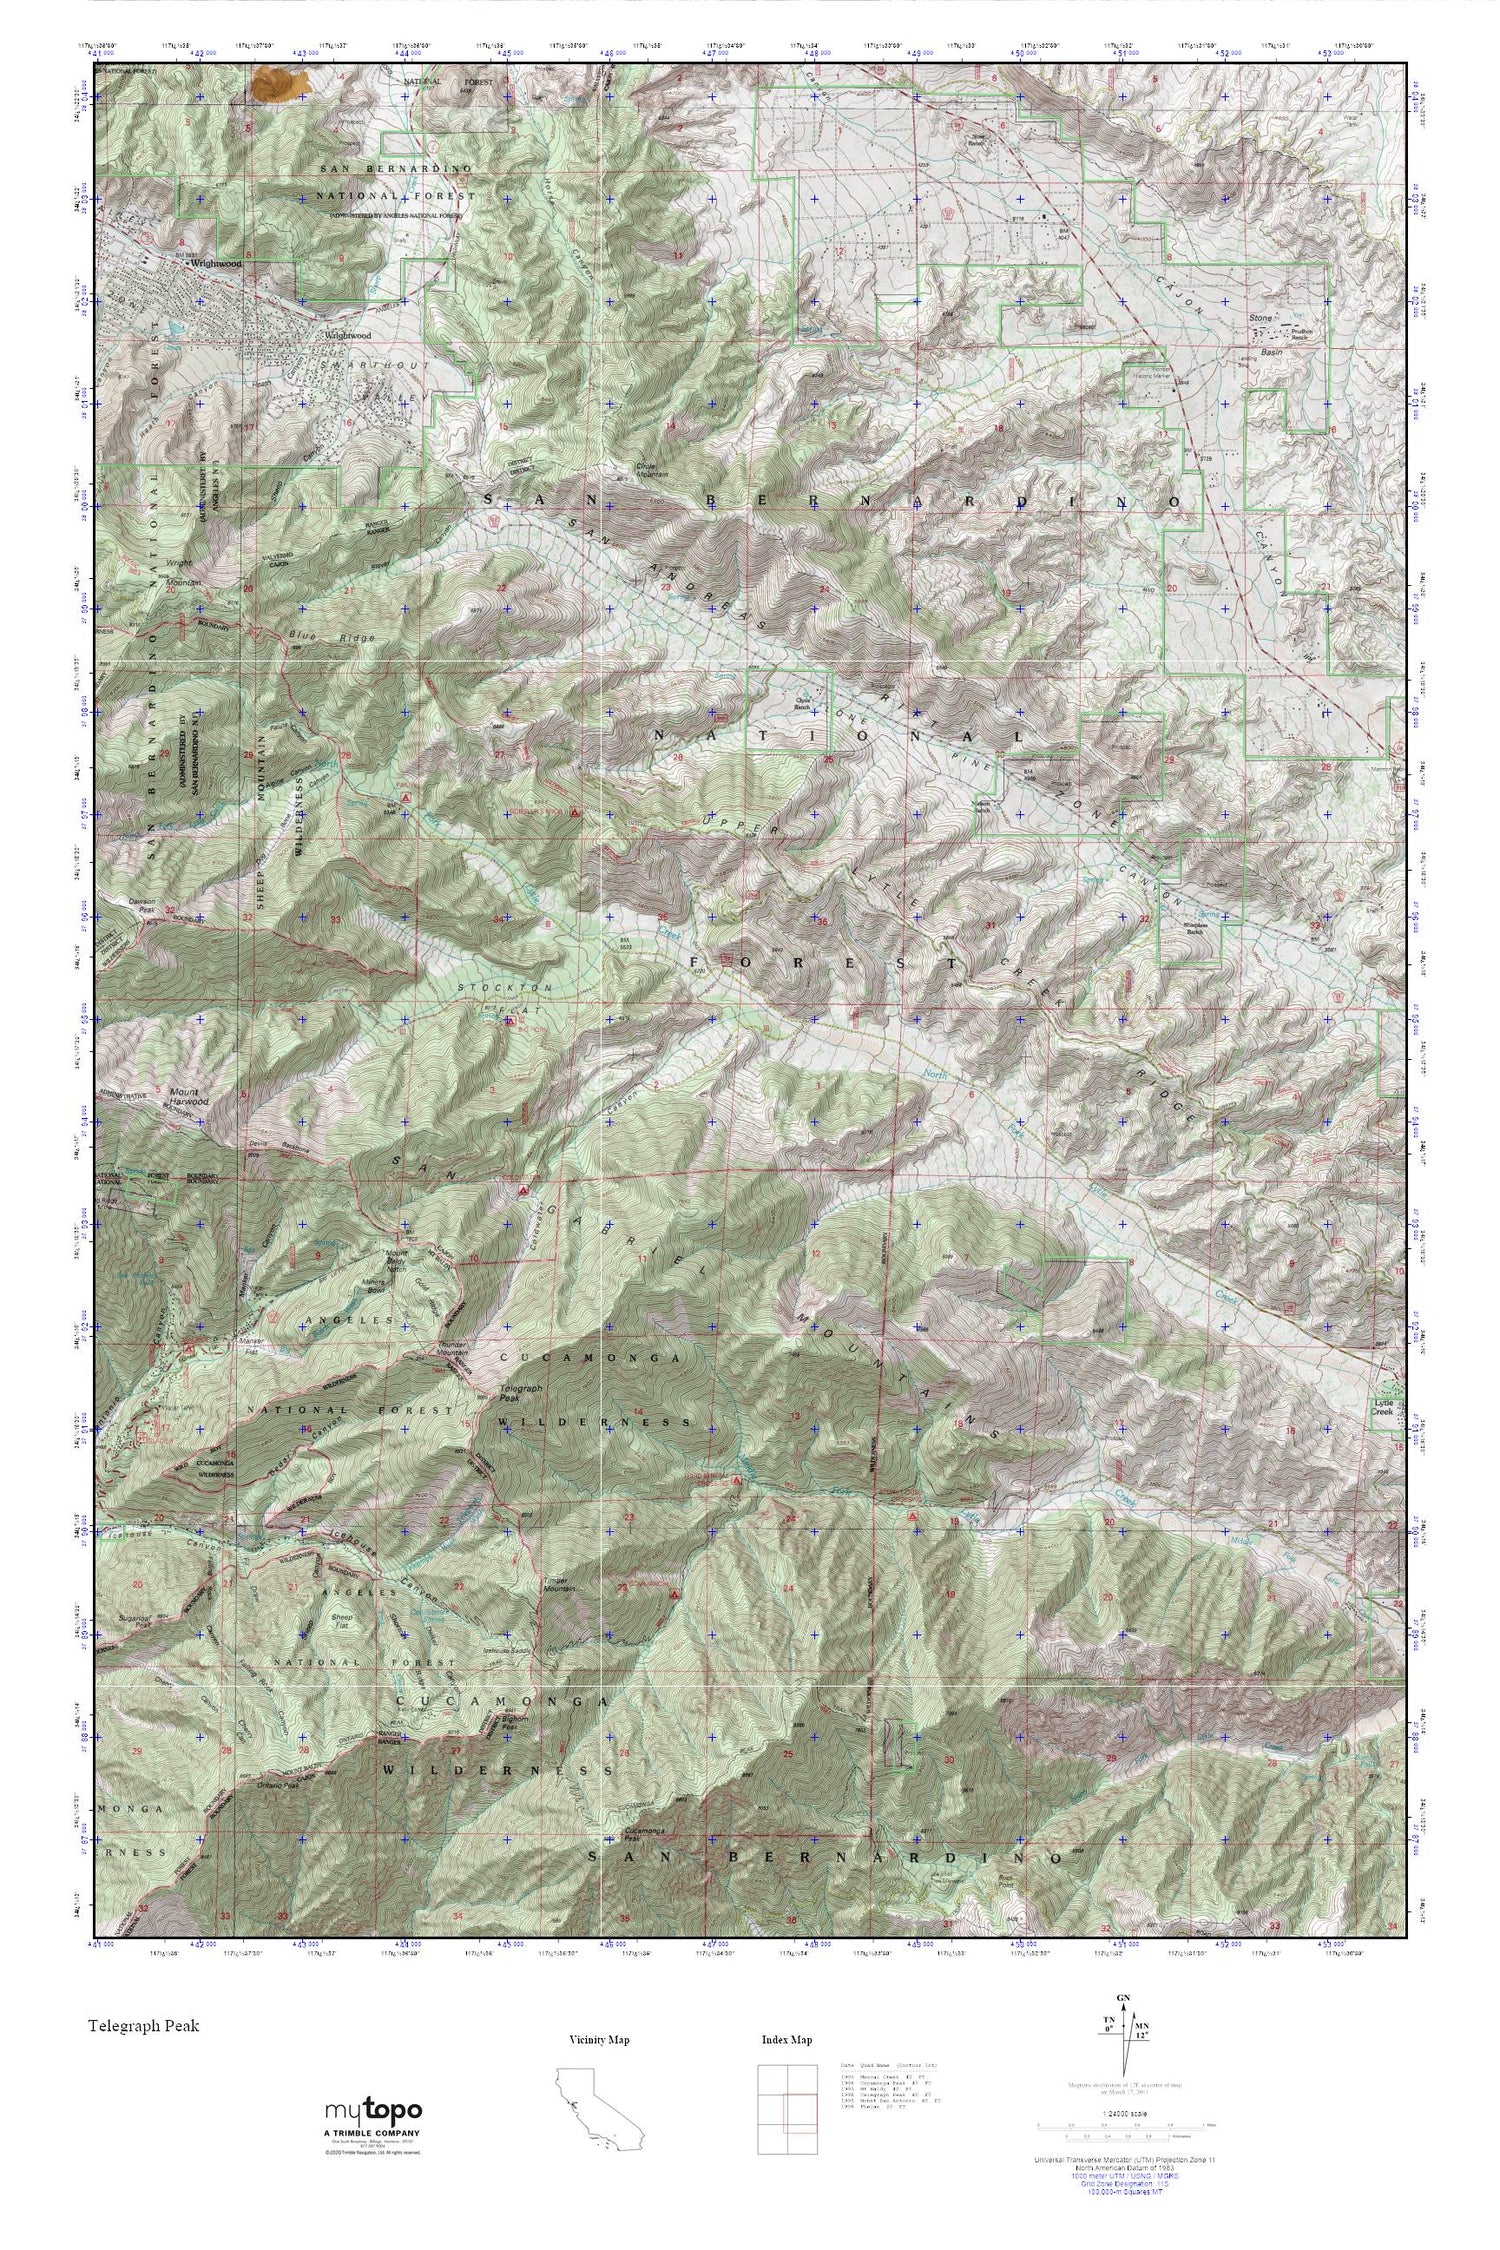 Telegraph Peak MyTopo Explorer Series Map Image